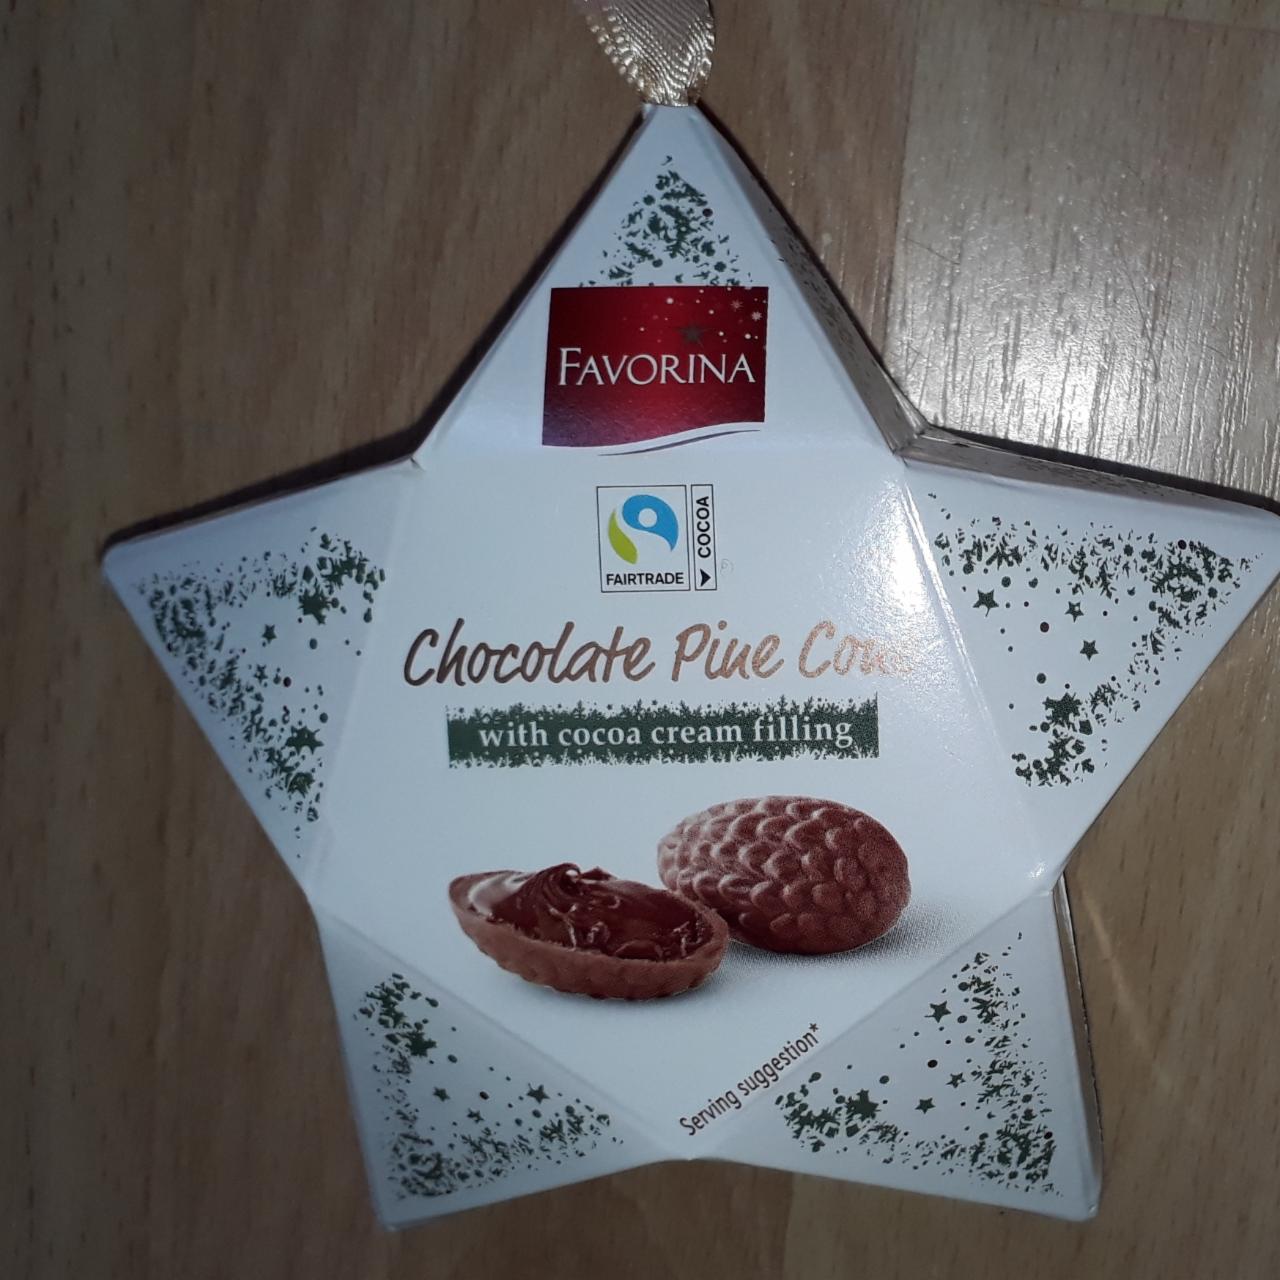 Fotografie - Chocolate Pine Cone with cocoa cream filling Favorina